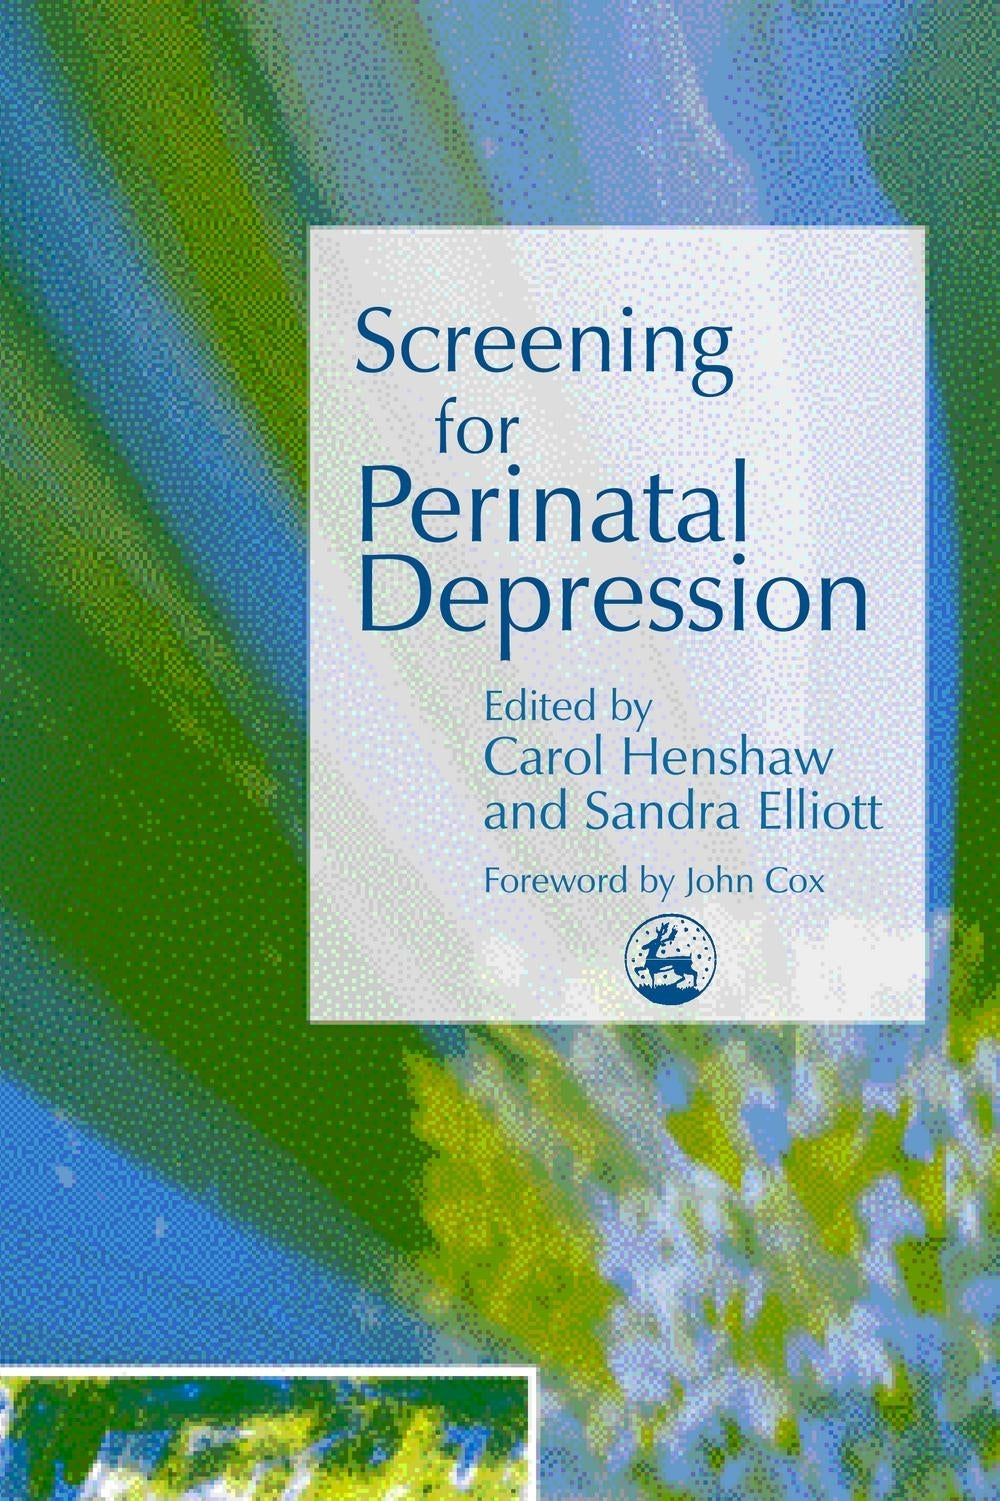 Screening for Perinatal Depression by Sandra Elliott, Carol Henshaw